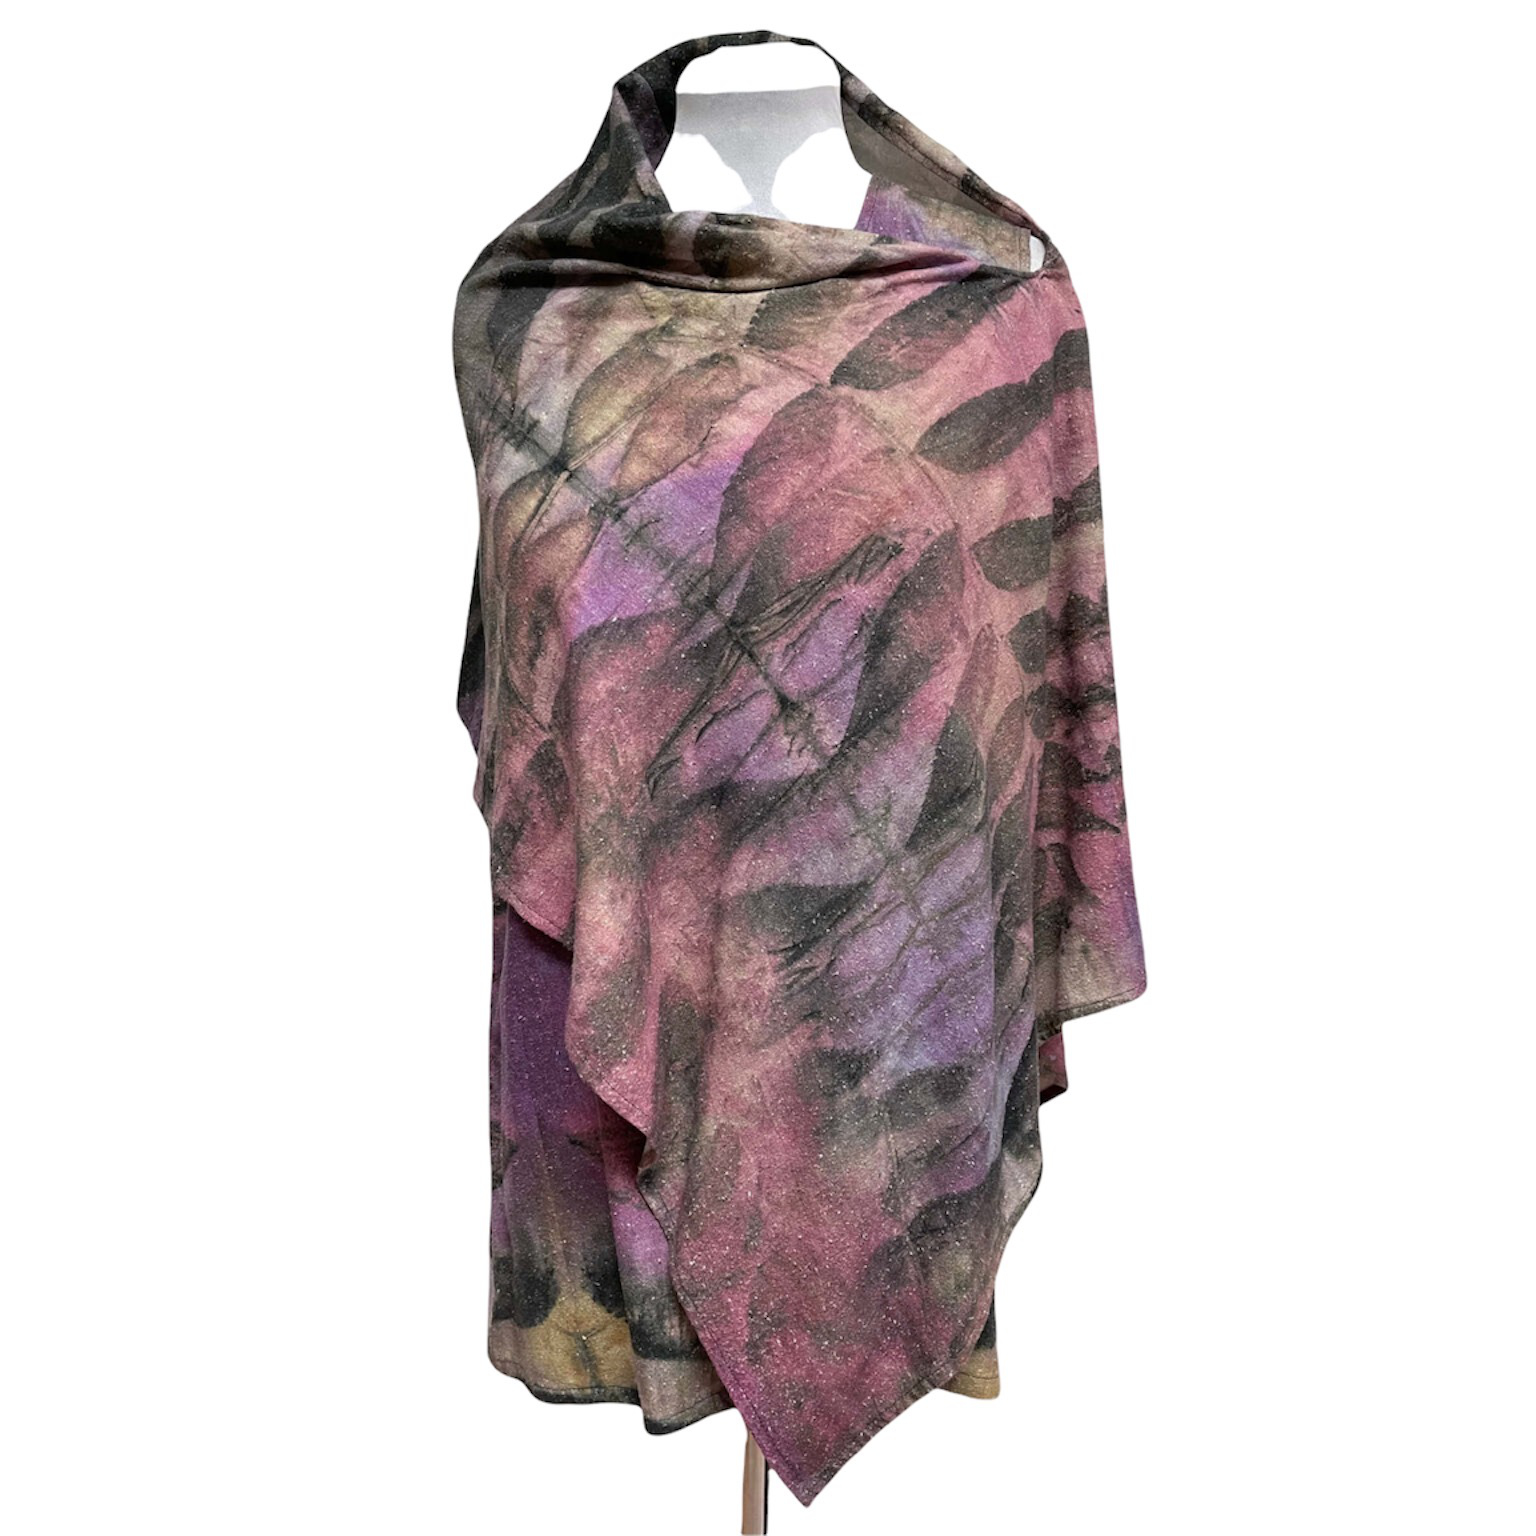 Raw silk eco dyed tank and shawl set